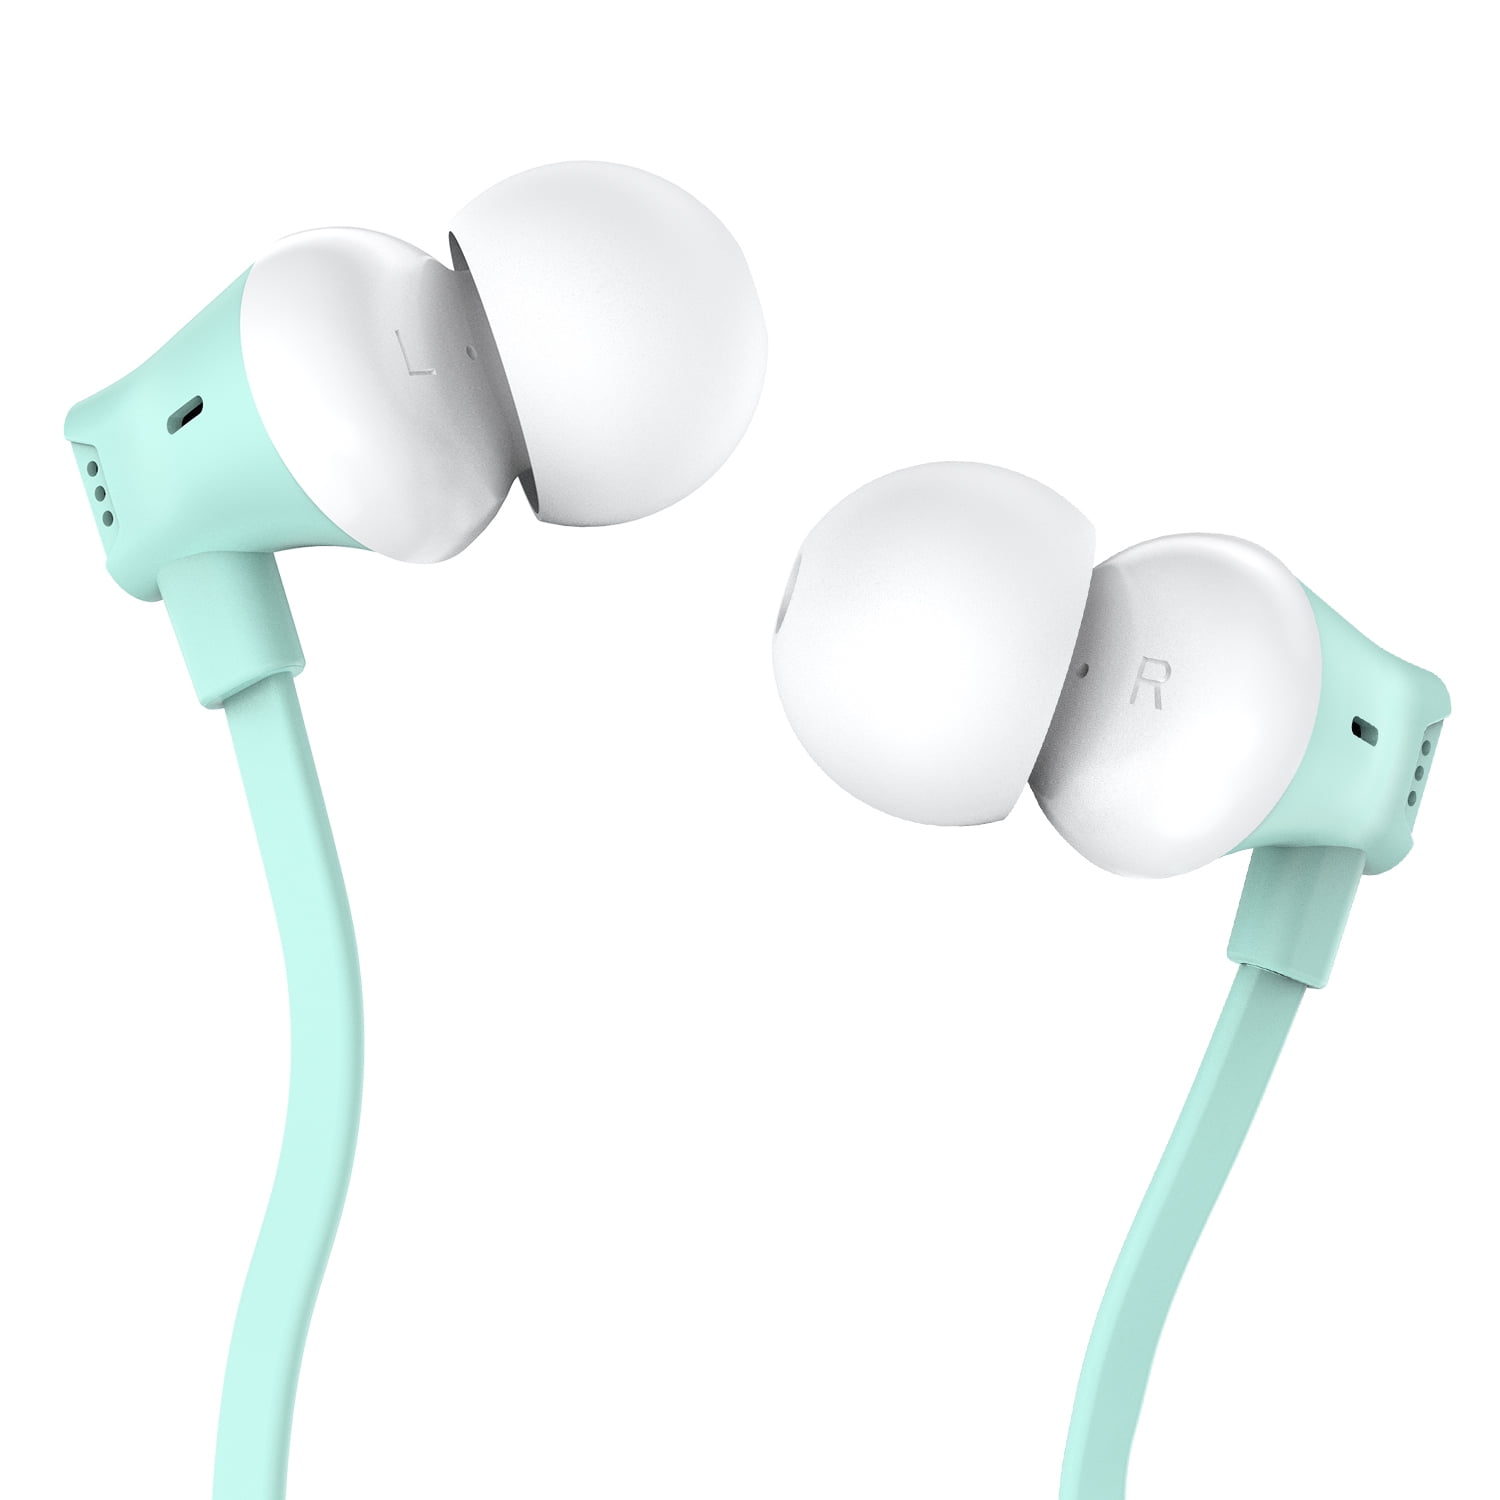 SEENDA Earbuds Wired Earphones in-Ear Headphones Heavy Bass Earbuds,Compatible with Most 3.5mm Jack